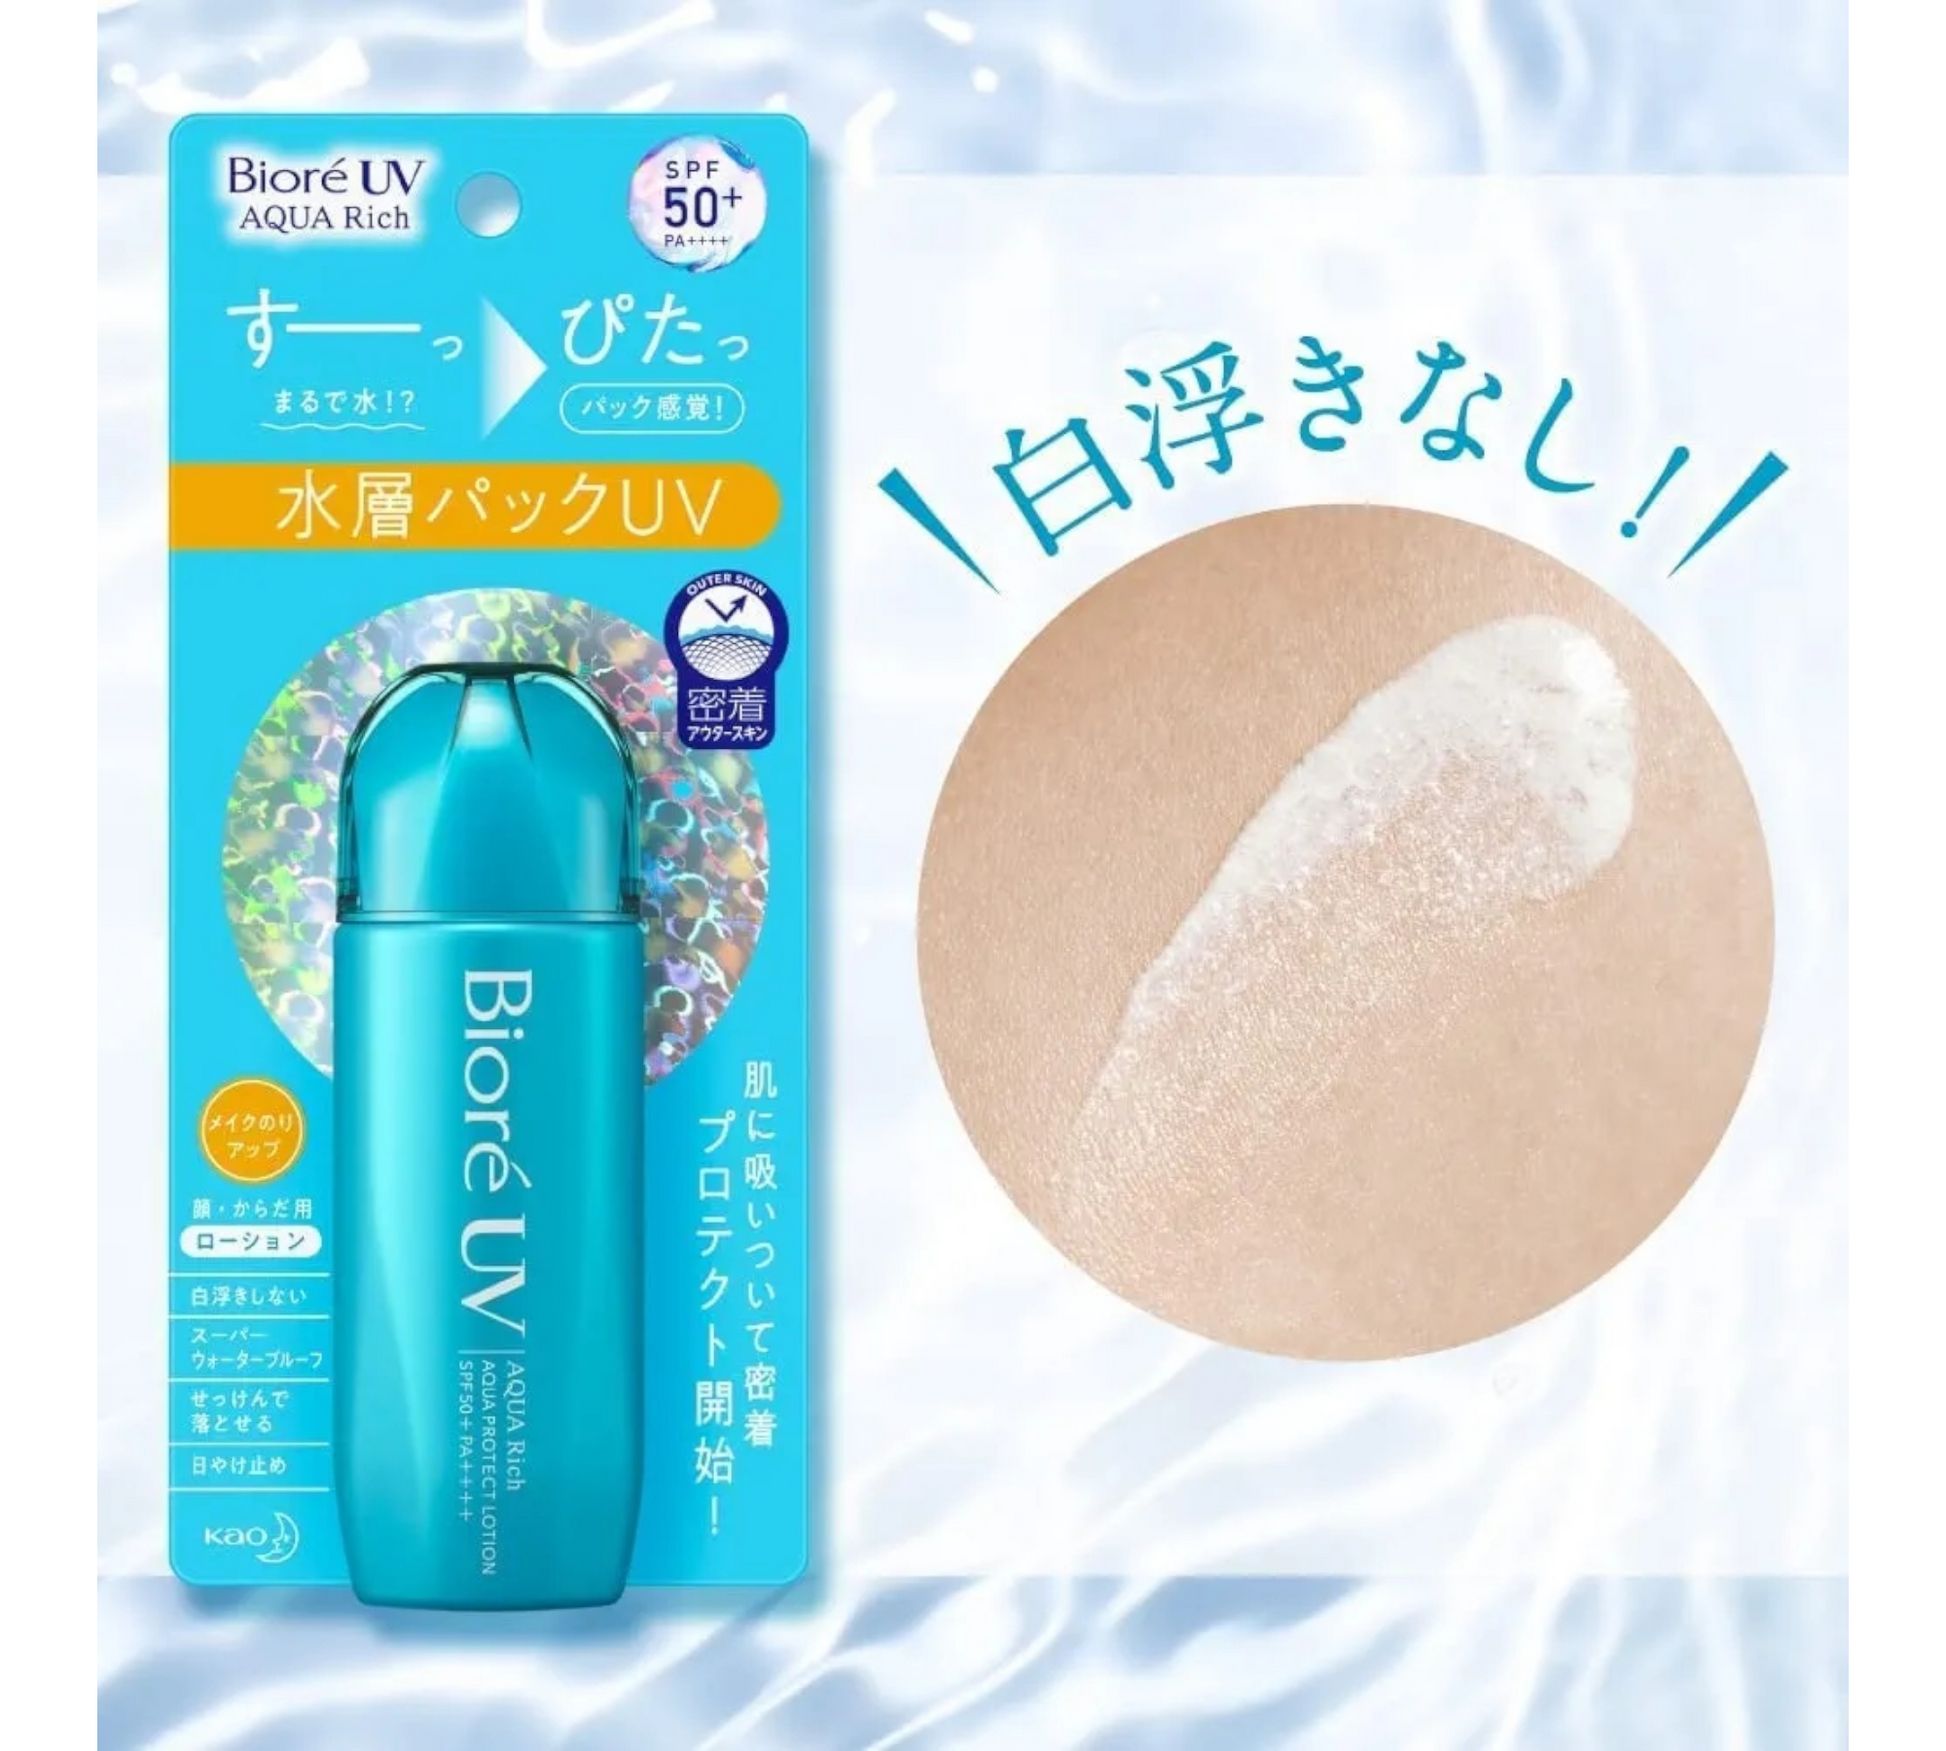 KAO Cupid Beauty Supplies Body Lotion Biore UV Aqua Rich Aqua Protect Lotion